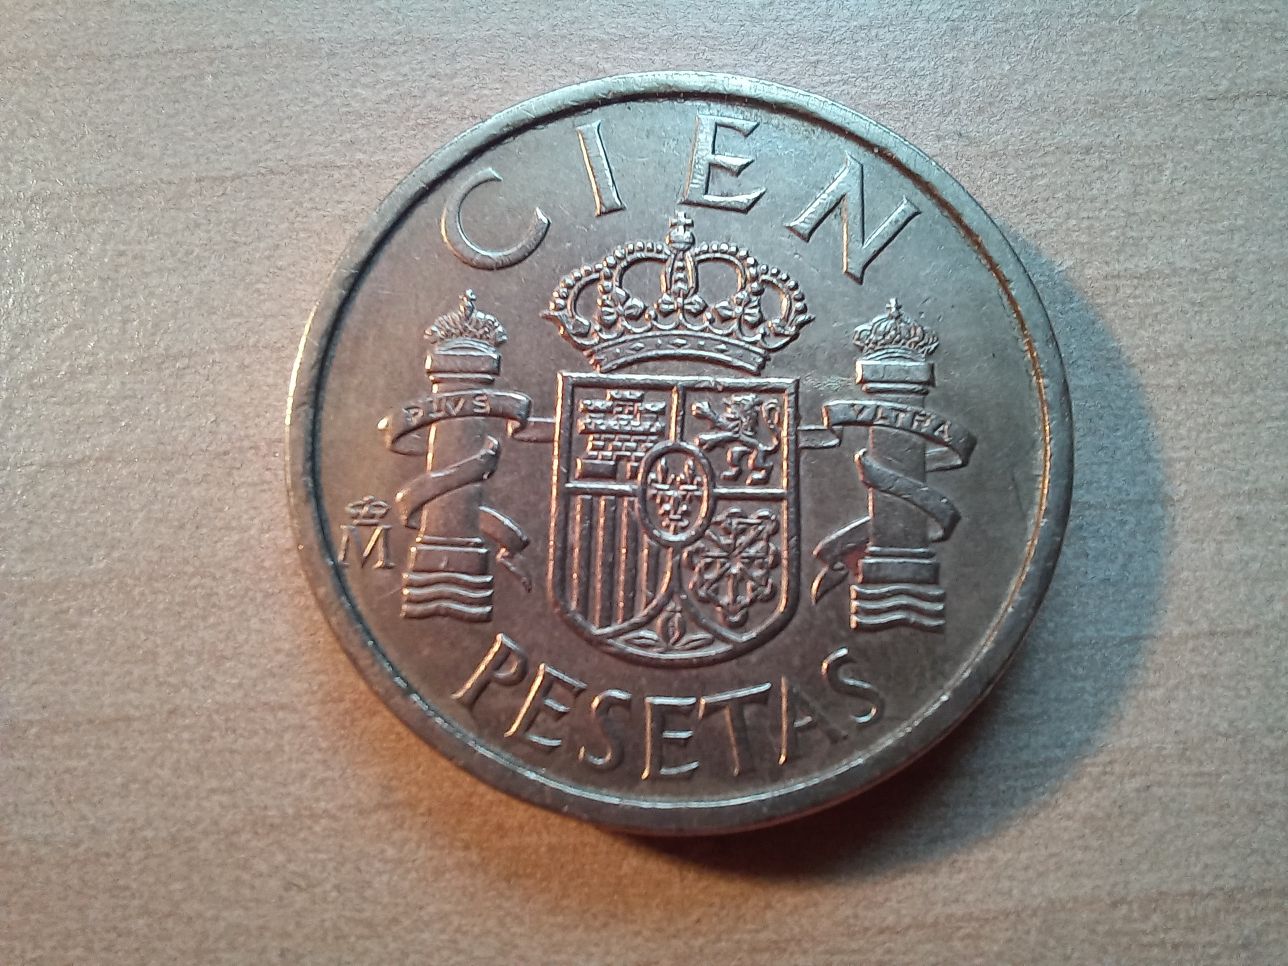 Hiszpania - moneta obiegowa 100 peset z 1985 roku